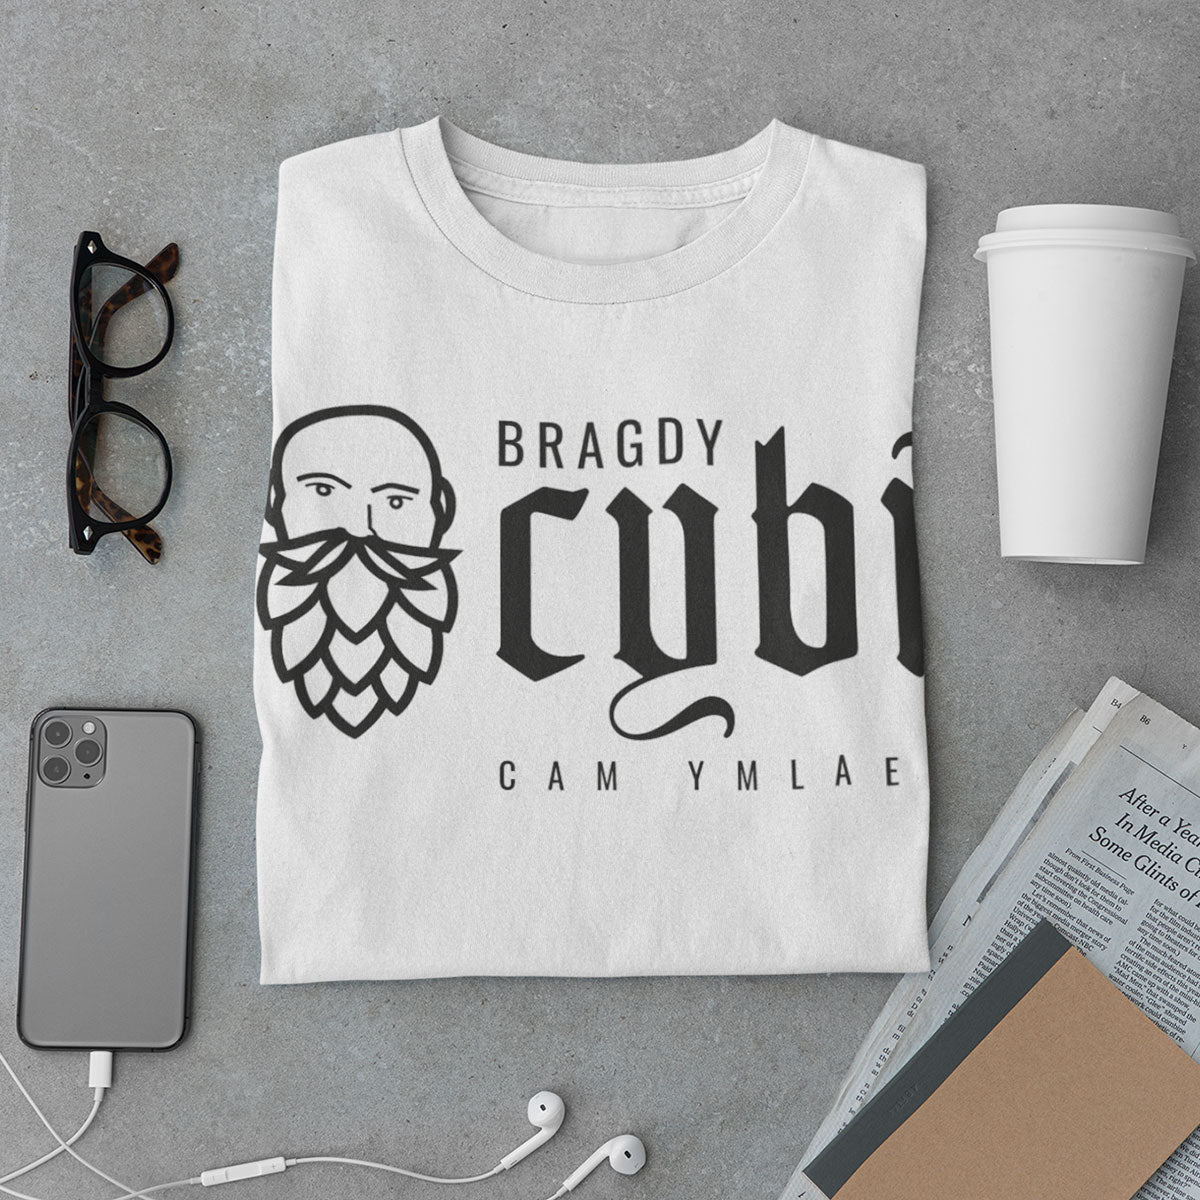 T-shirt / Crys-T - Bragdy Cybi logo